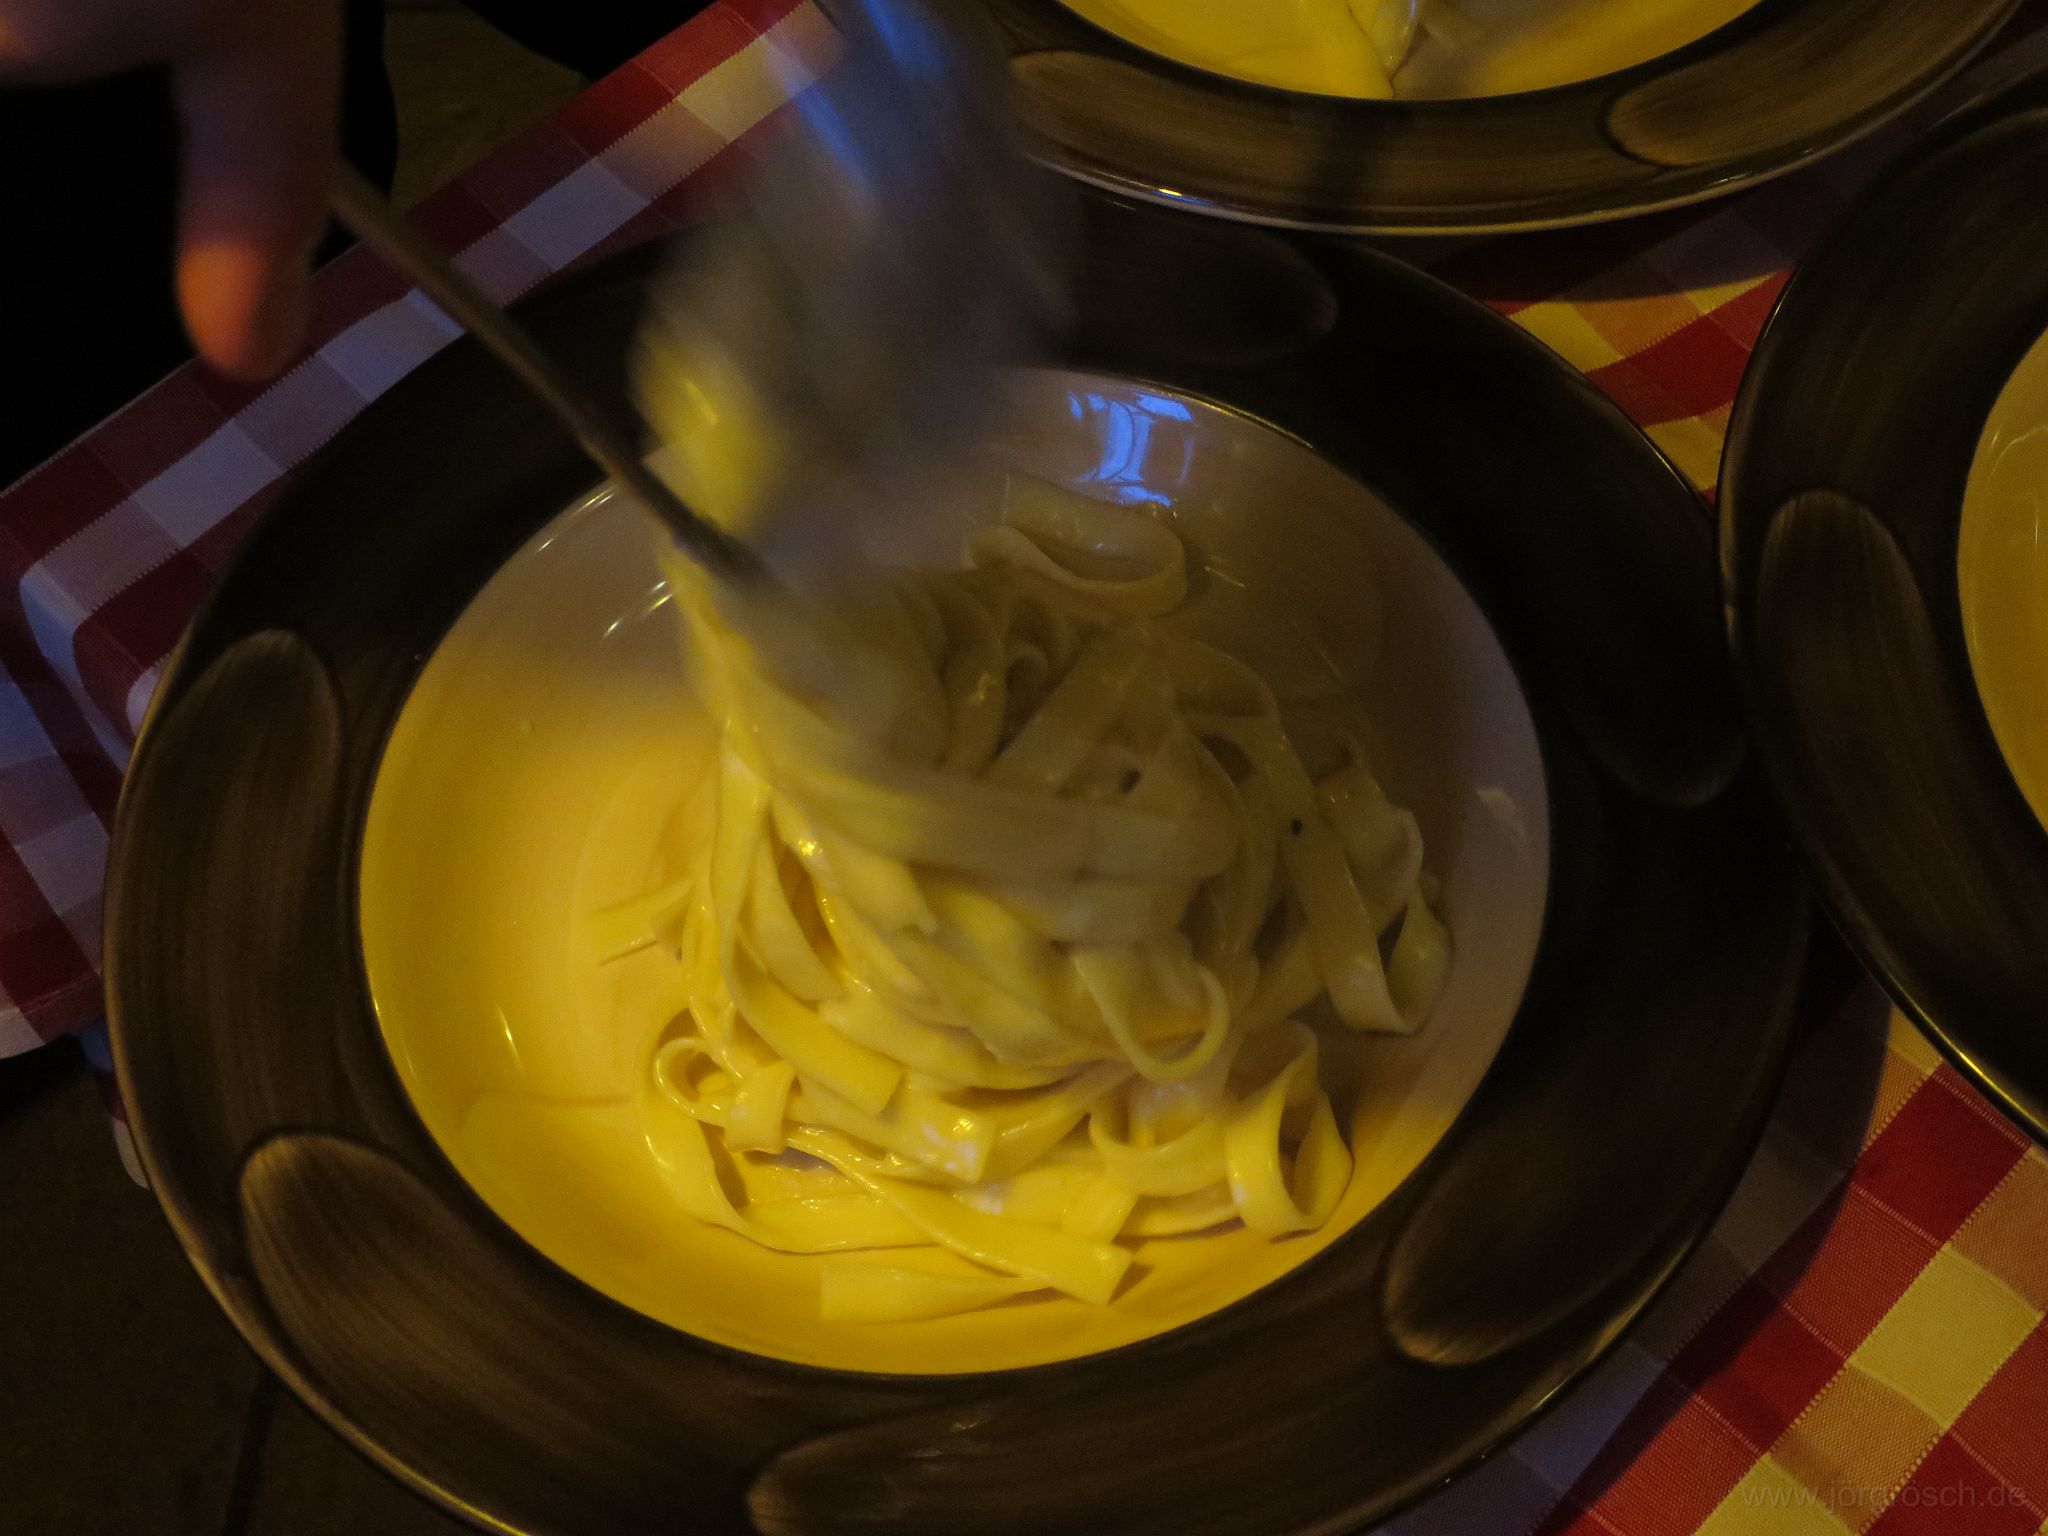 20150321-nudeln-kas.jpg - Nudeln in Parmesan gewirrlt